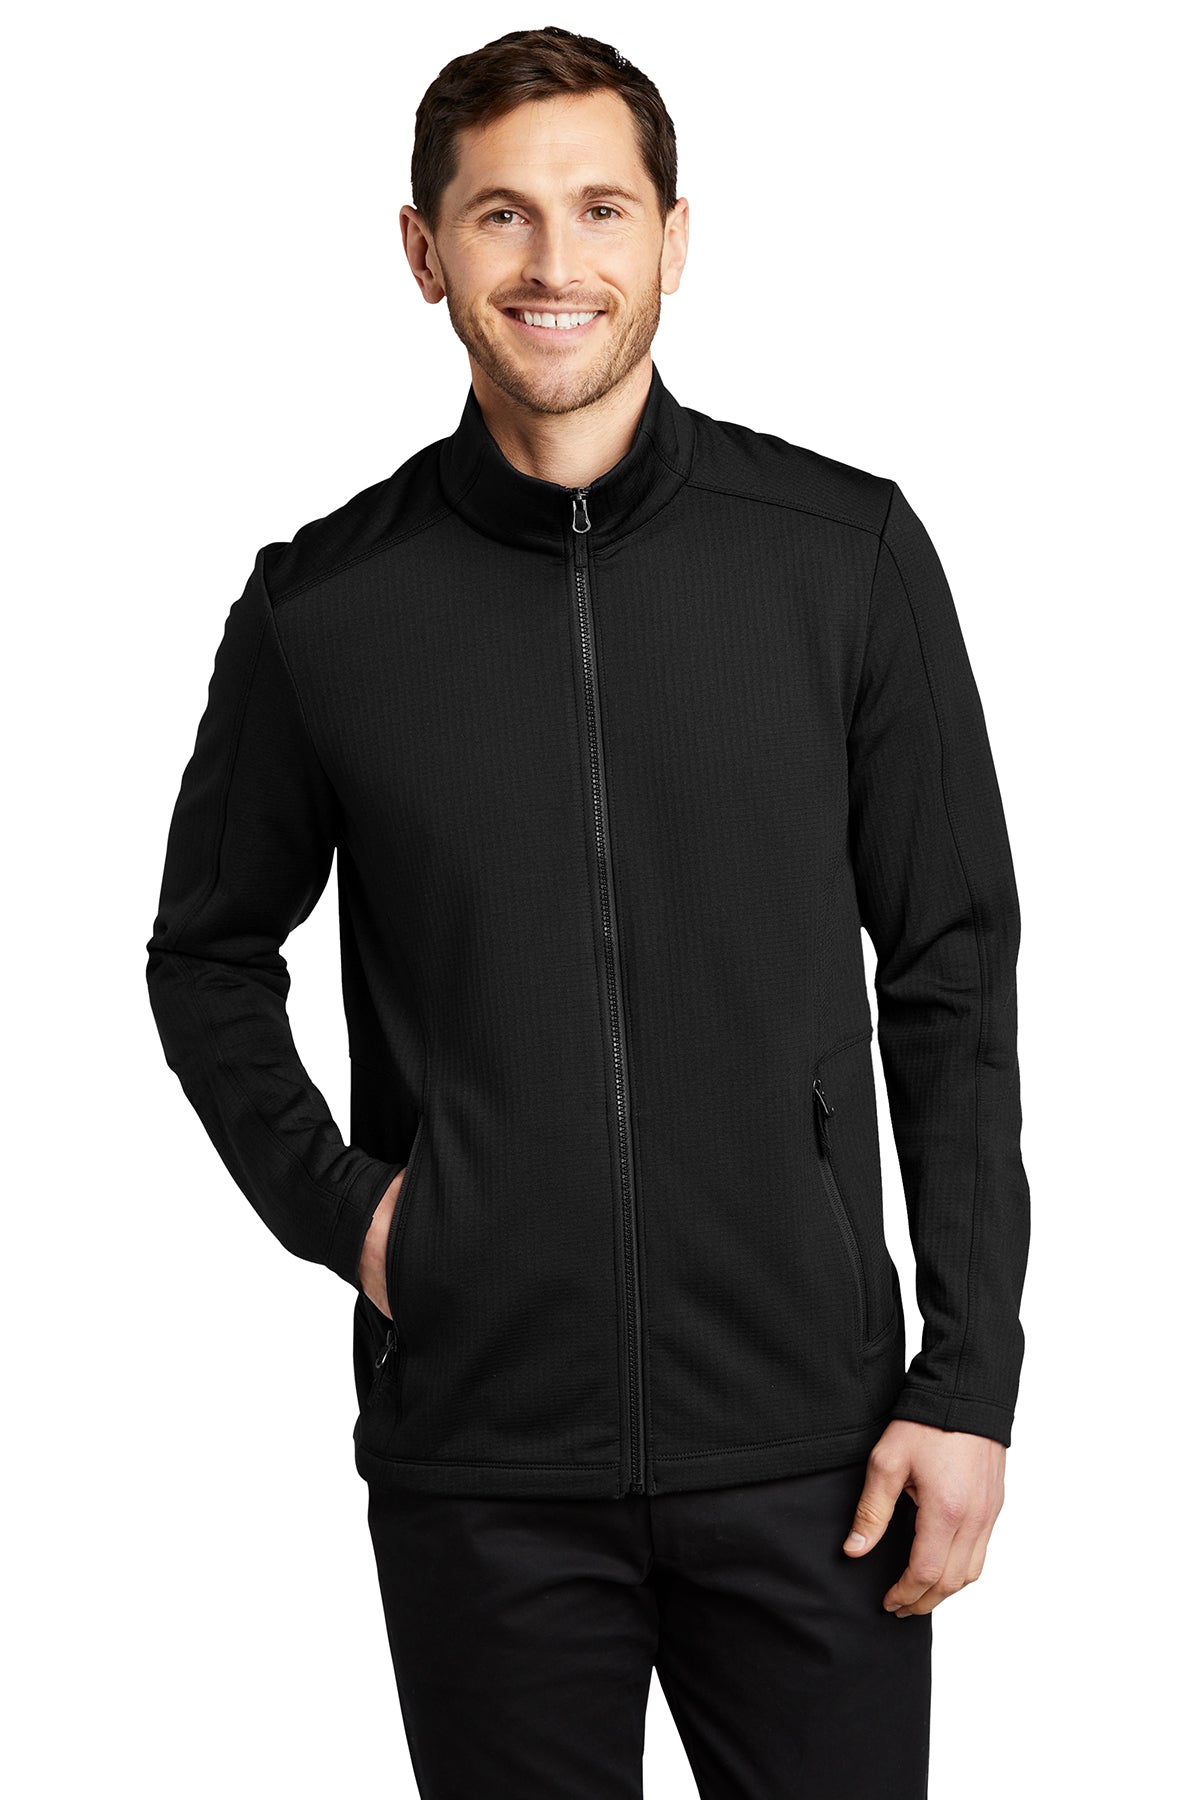 B2B1 F239 Port Authority® Men's Grid Fleece Jacket